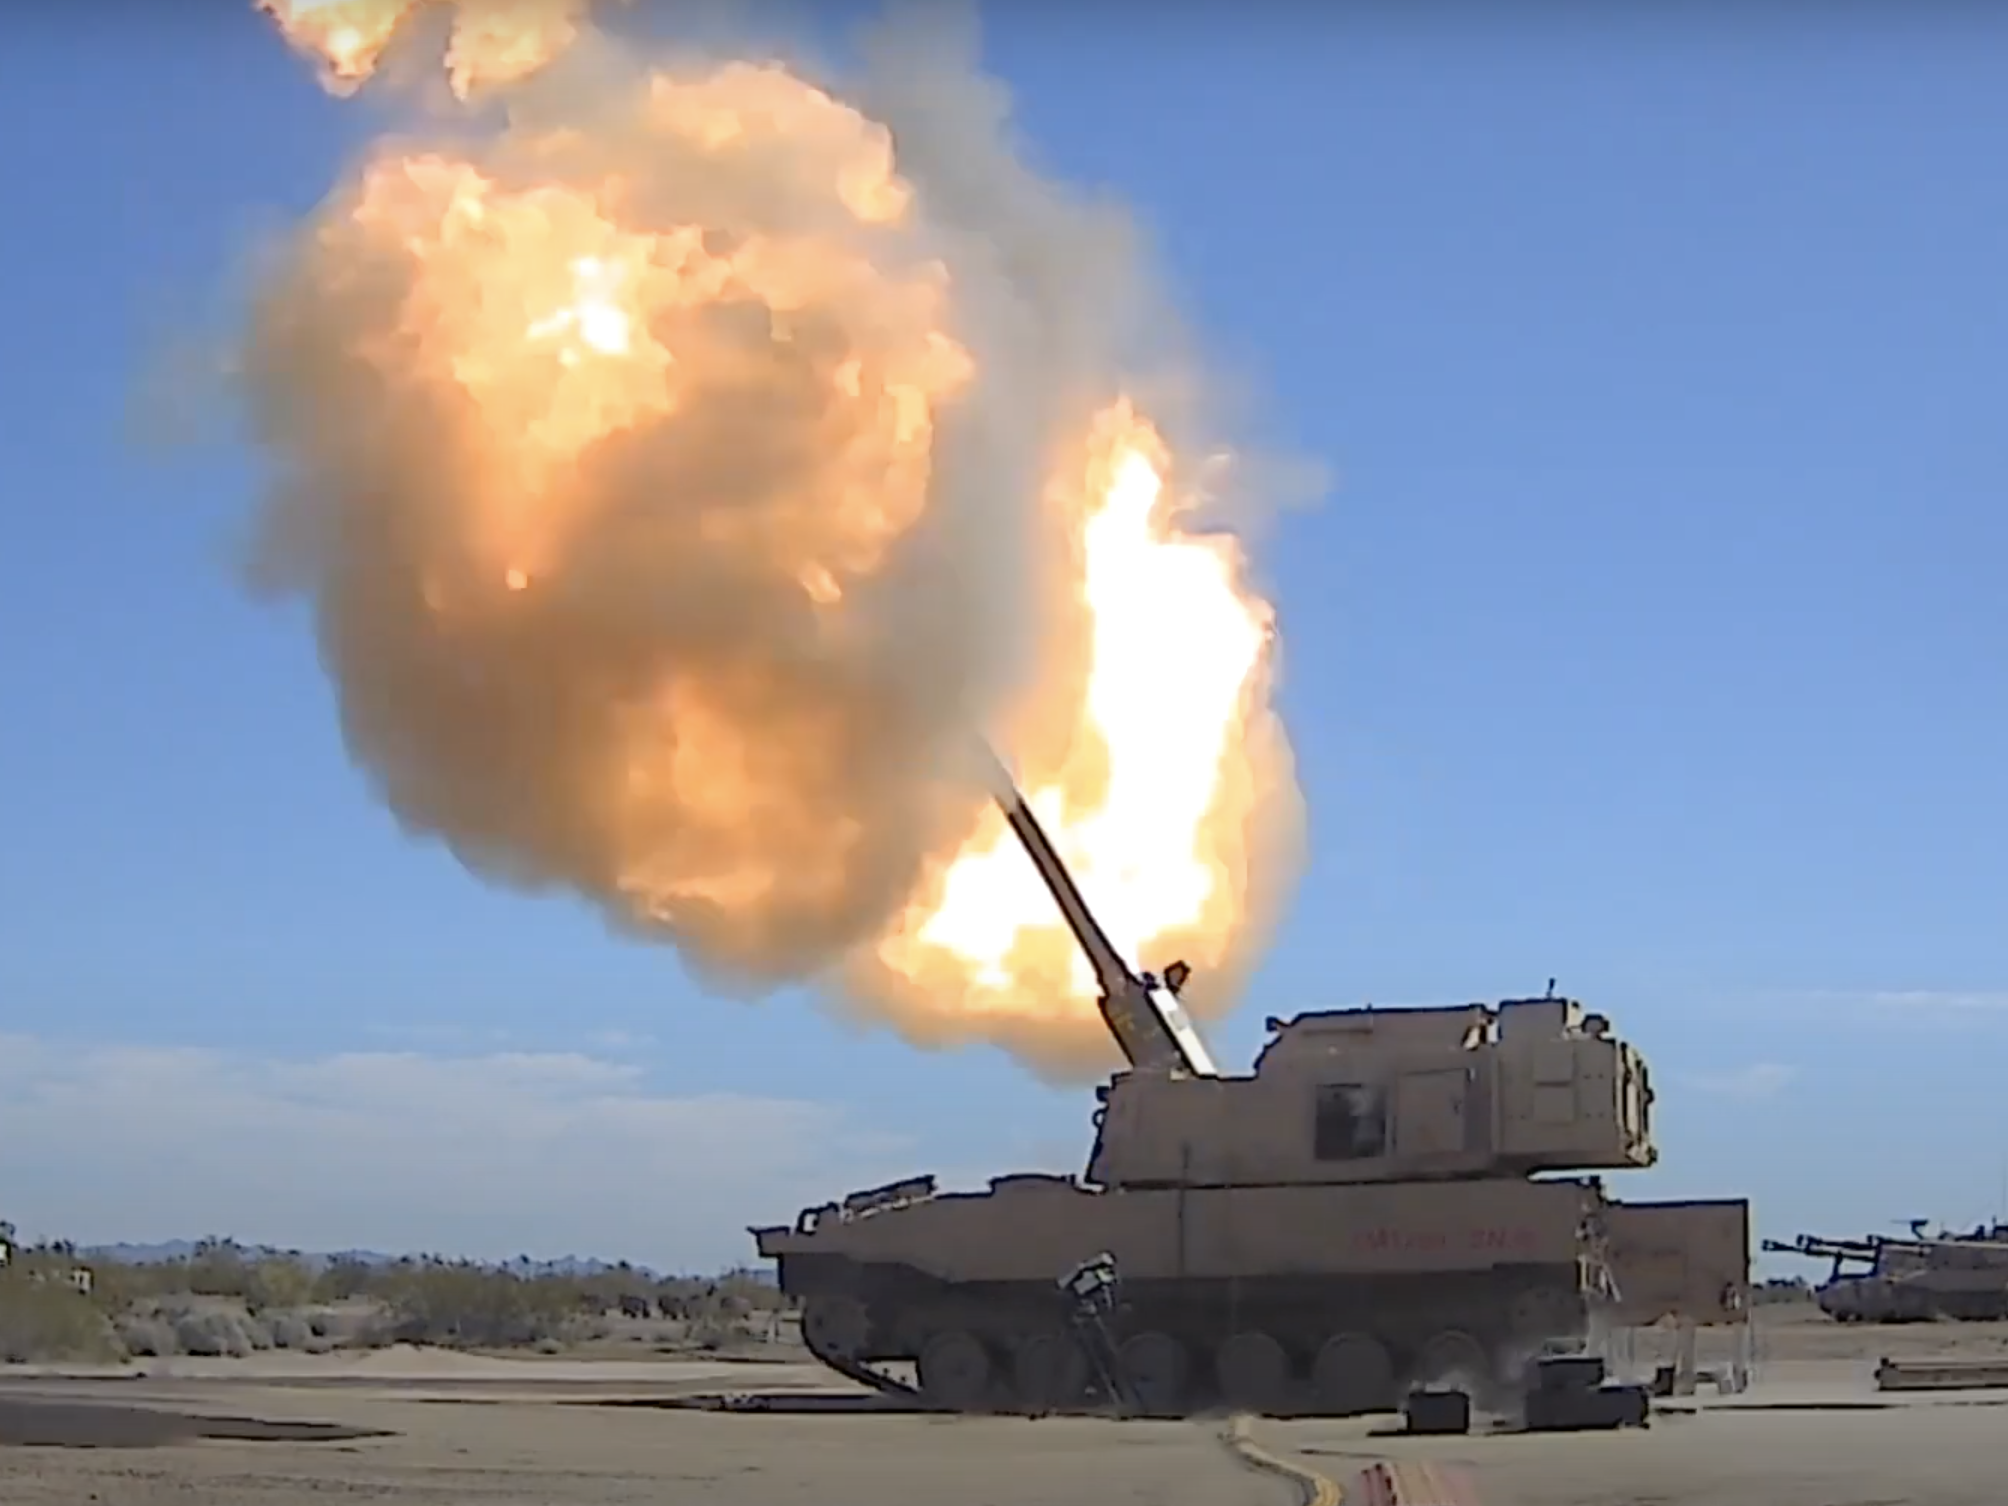 Tank firing a missile